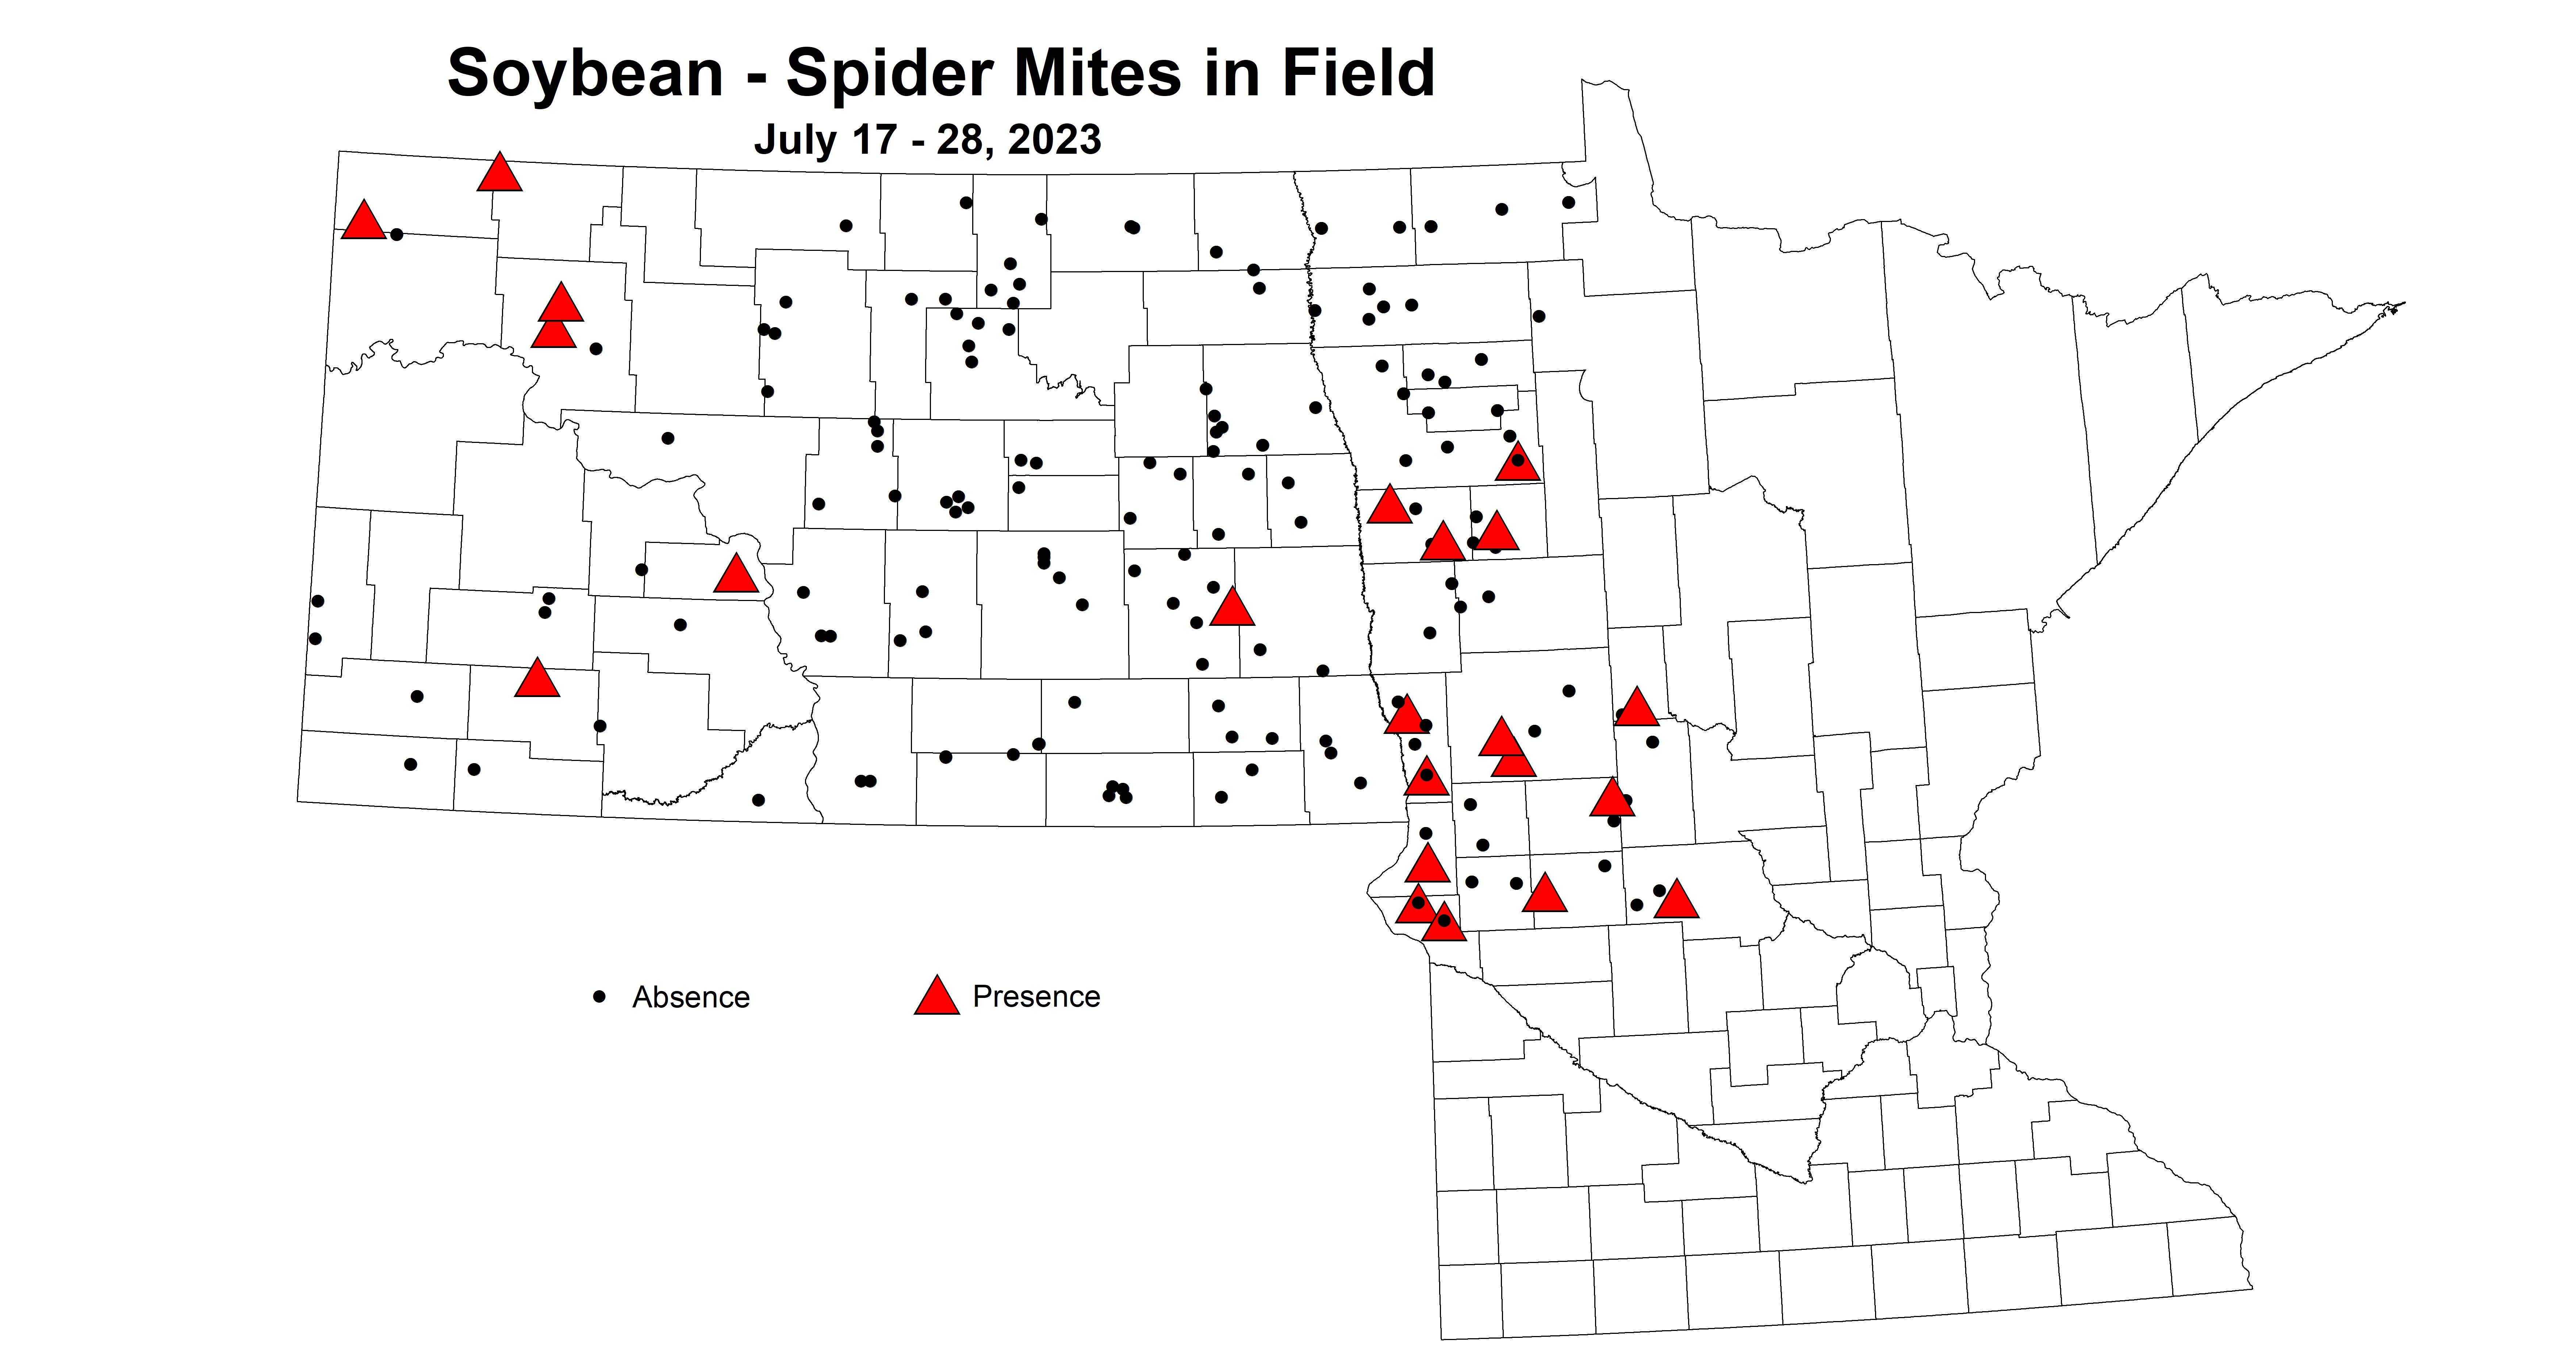 soybean spider mites in field July 17-28 2023